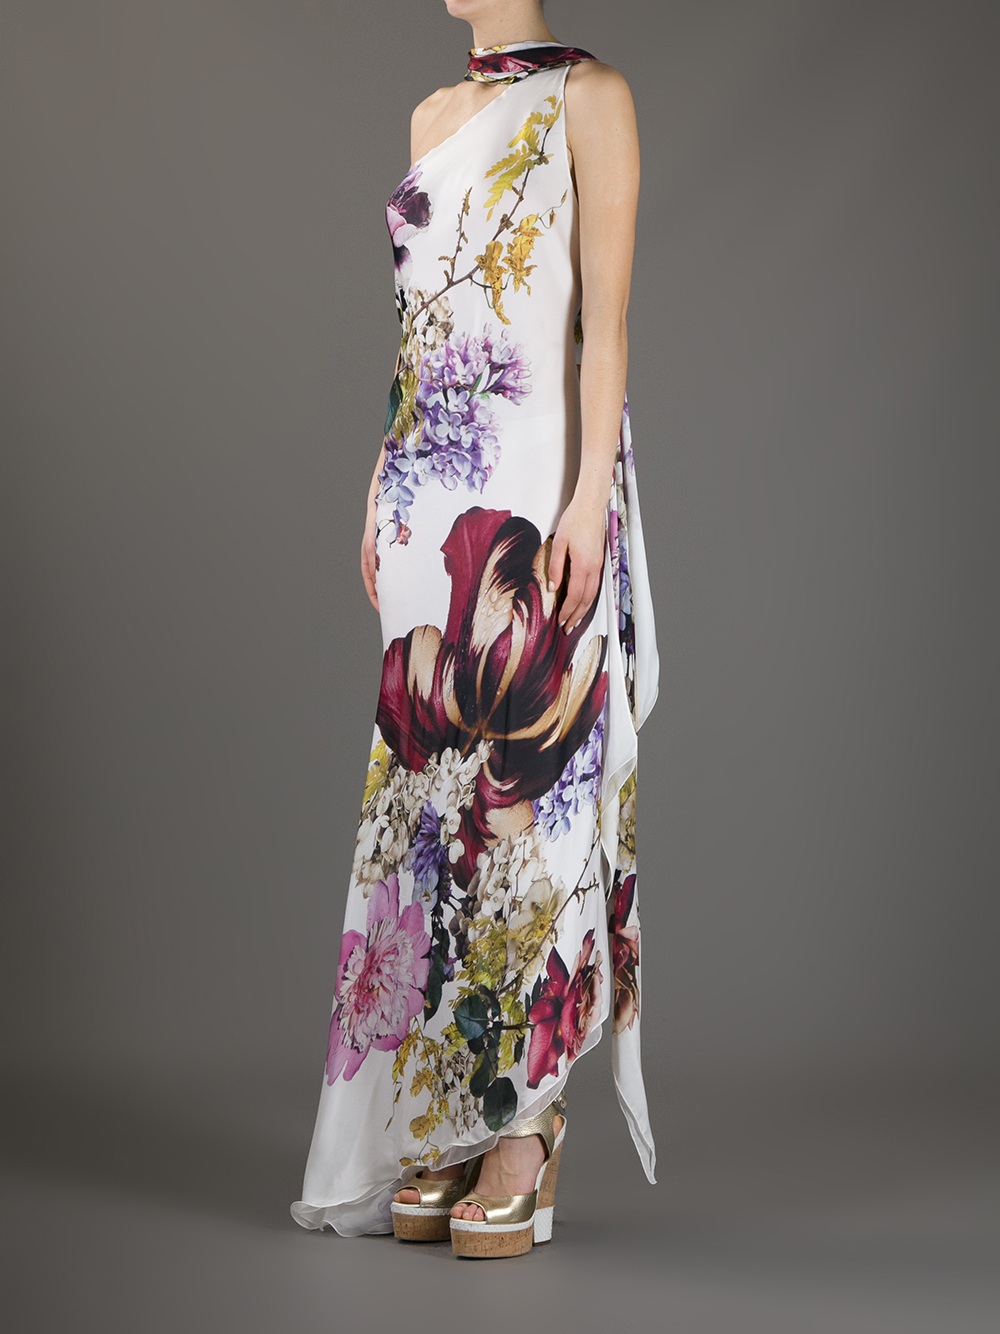 Lyst - Roberto Cavalli One Shoulder Floral Print Dress